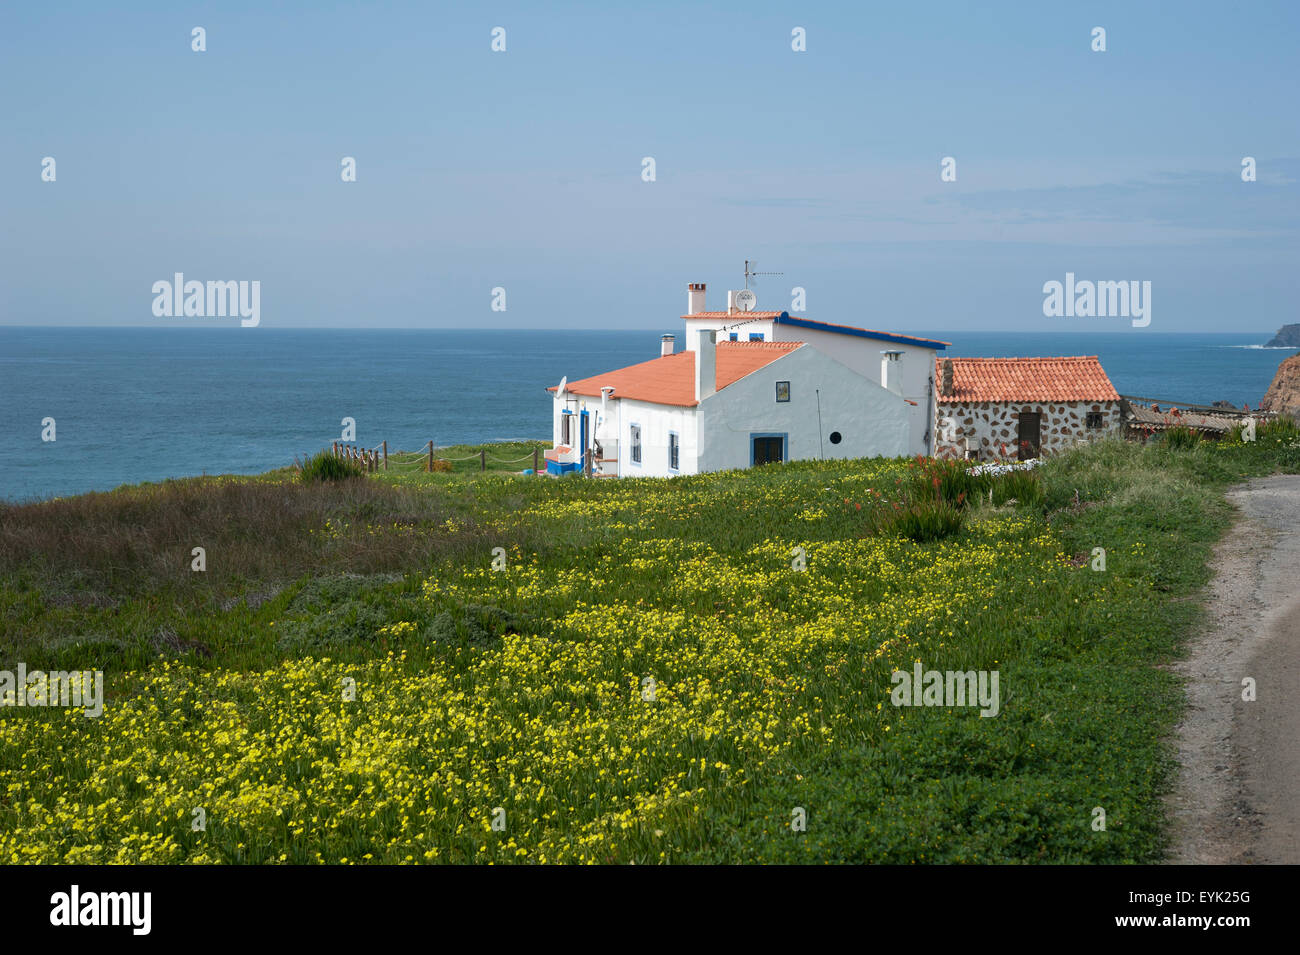 View of cottage at Entrada da Barco, Parque Natural do Sudoeste Alentejano e Costa Vicentina, Portugal. Stock Photo